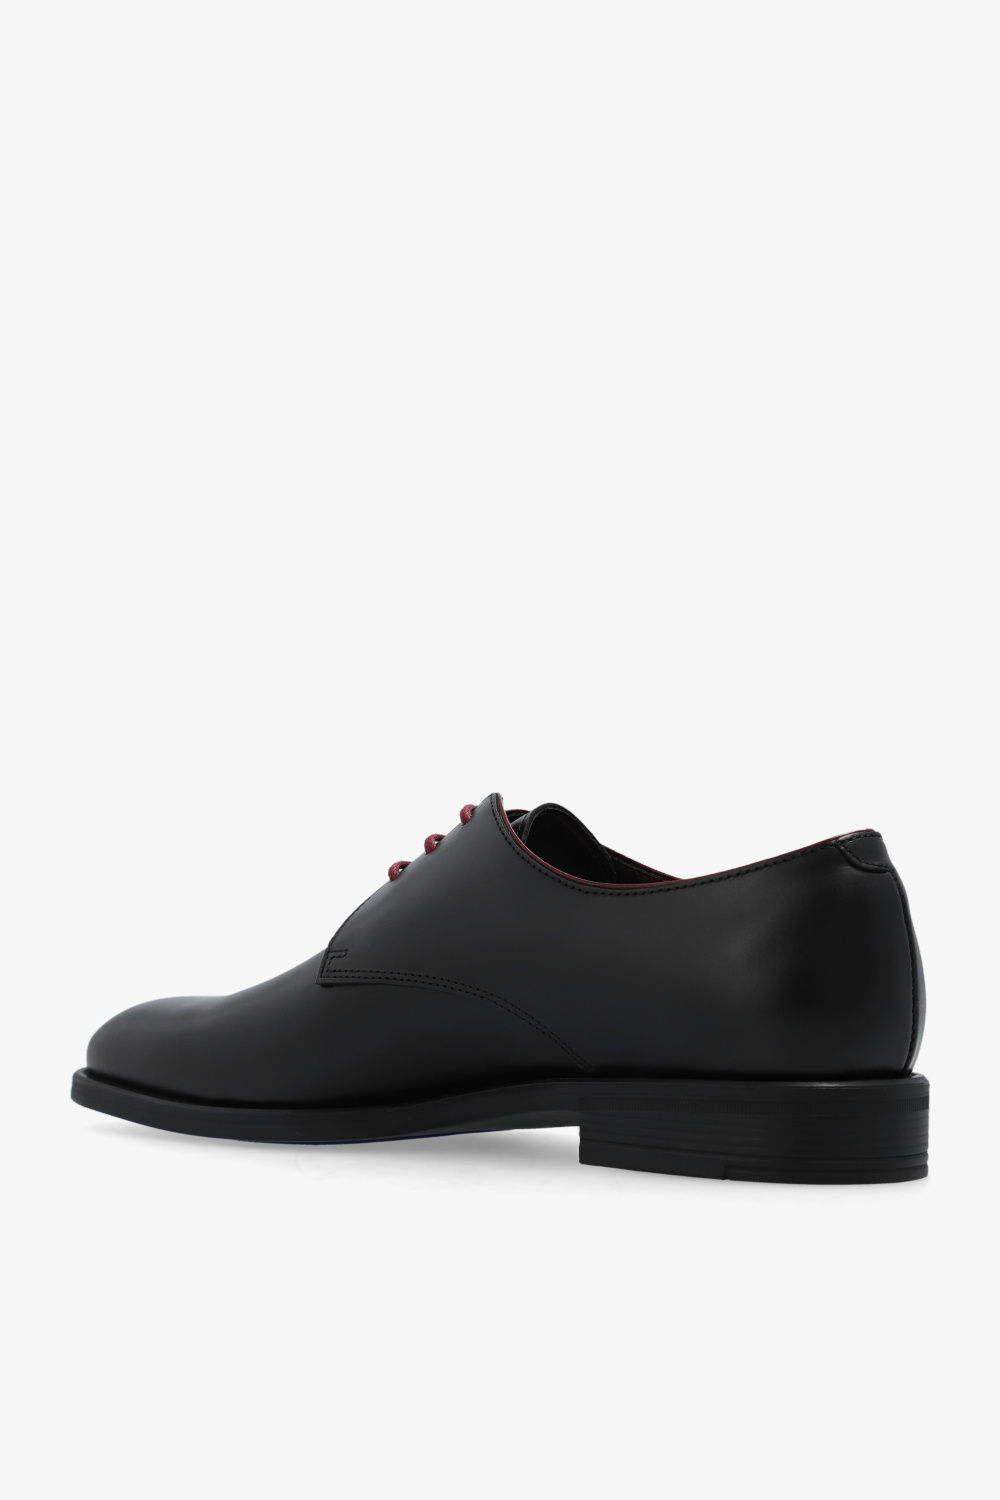 zapatillas de running Puma pronador talla 45 ‘Bayard’ leather shoes